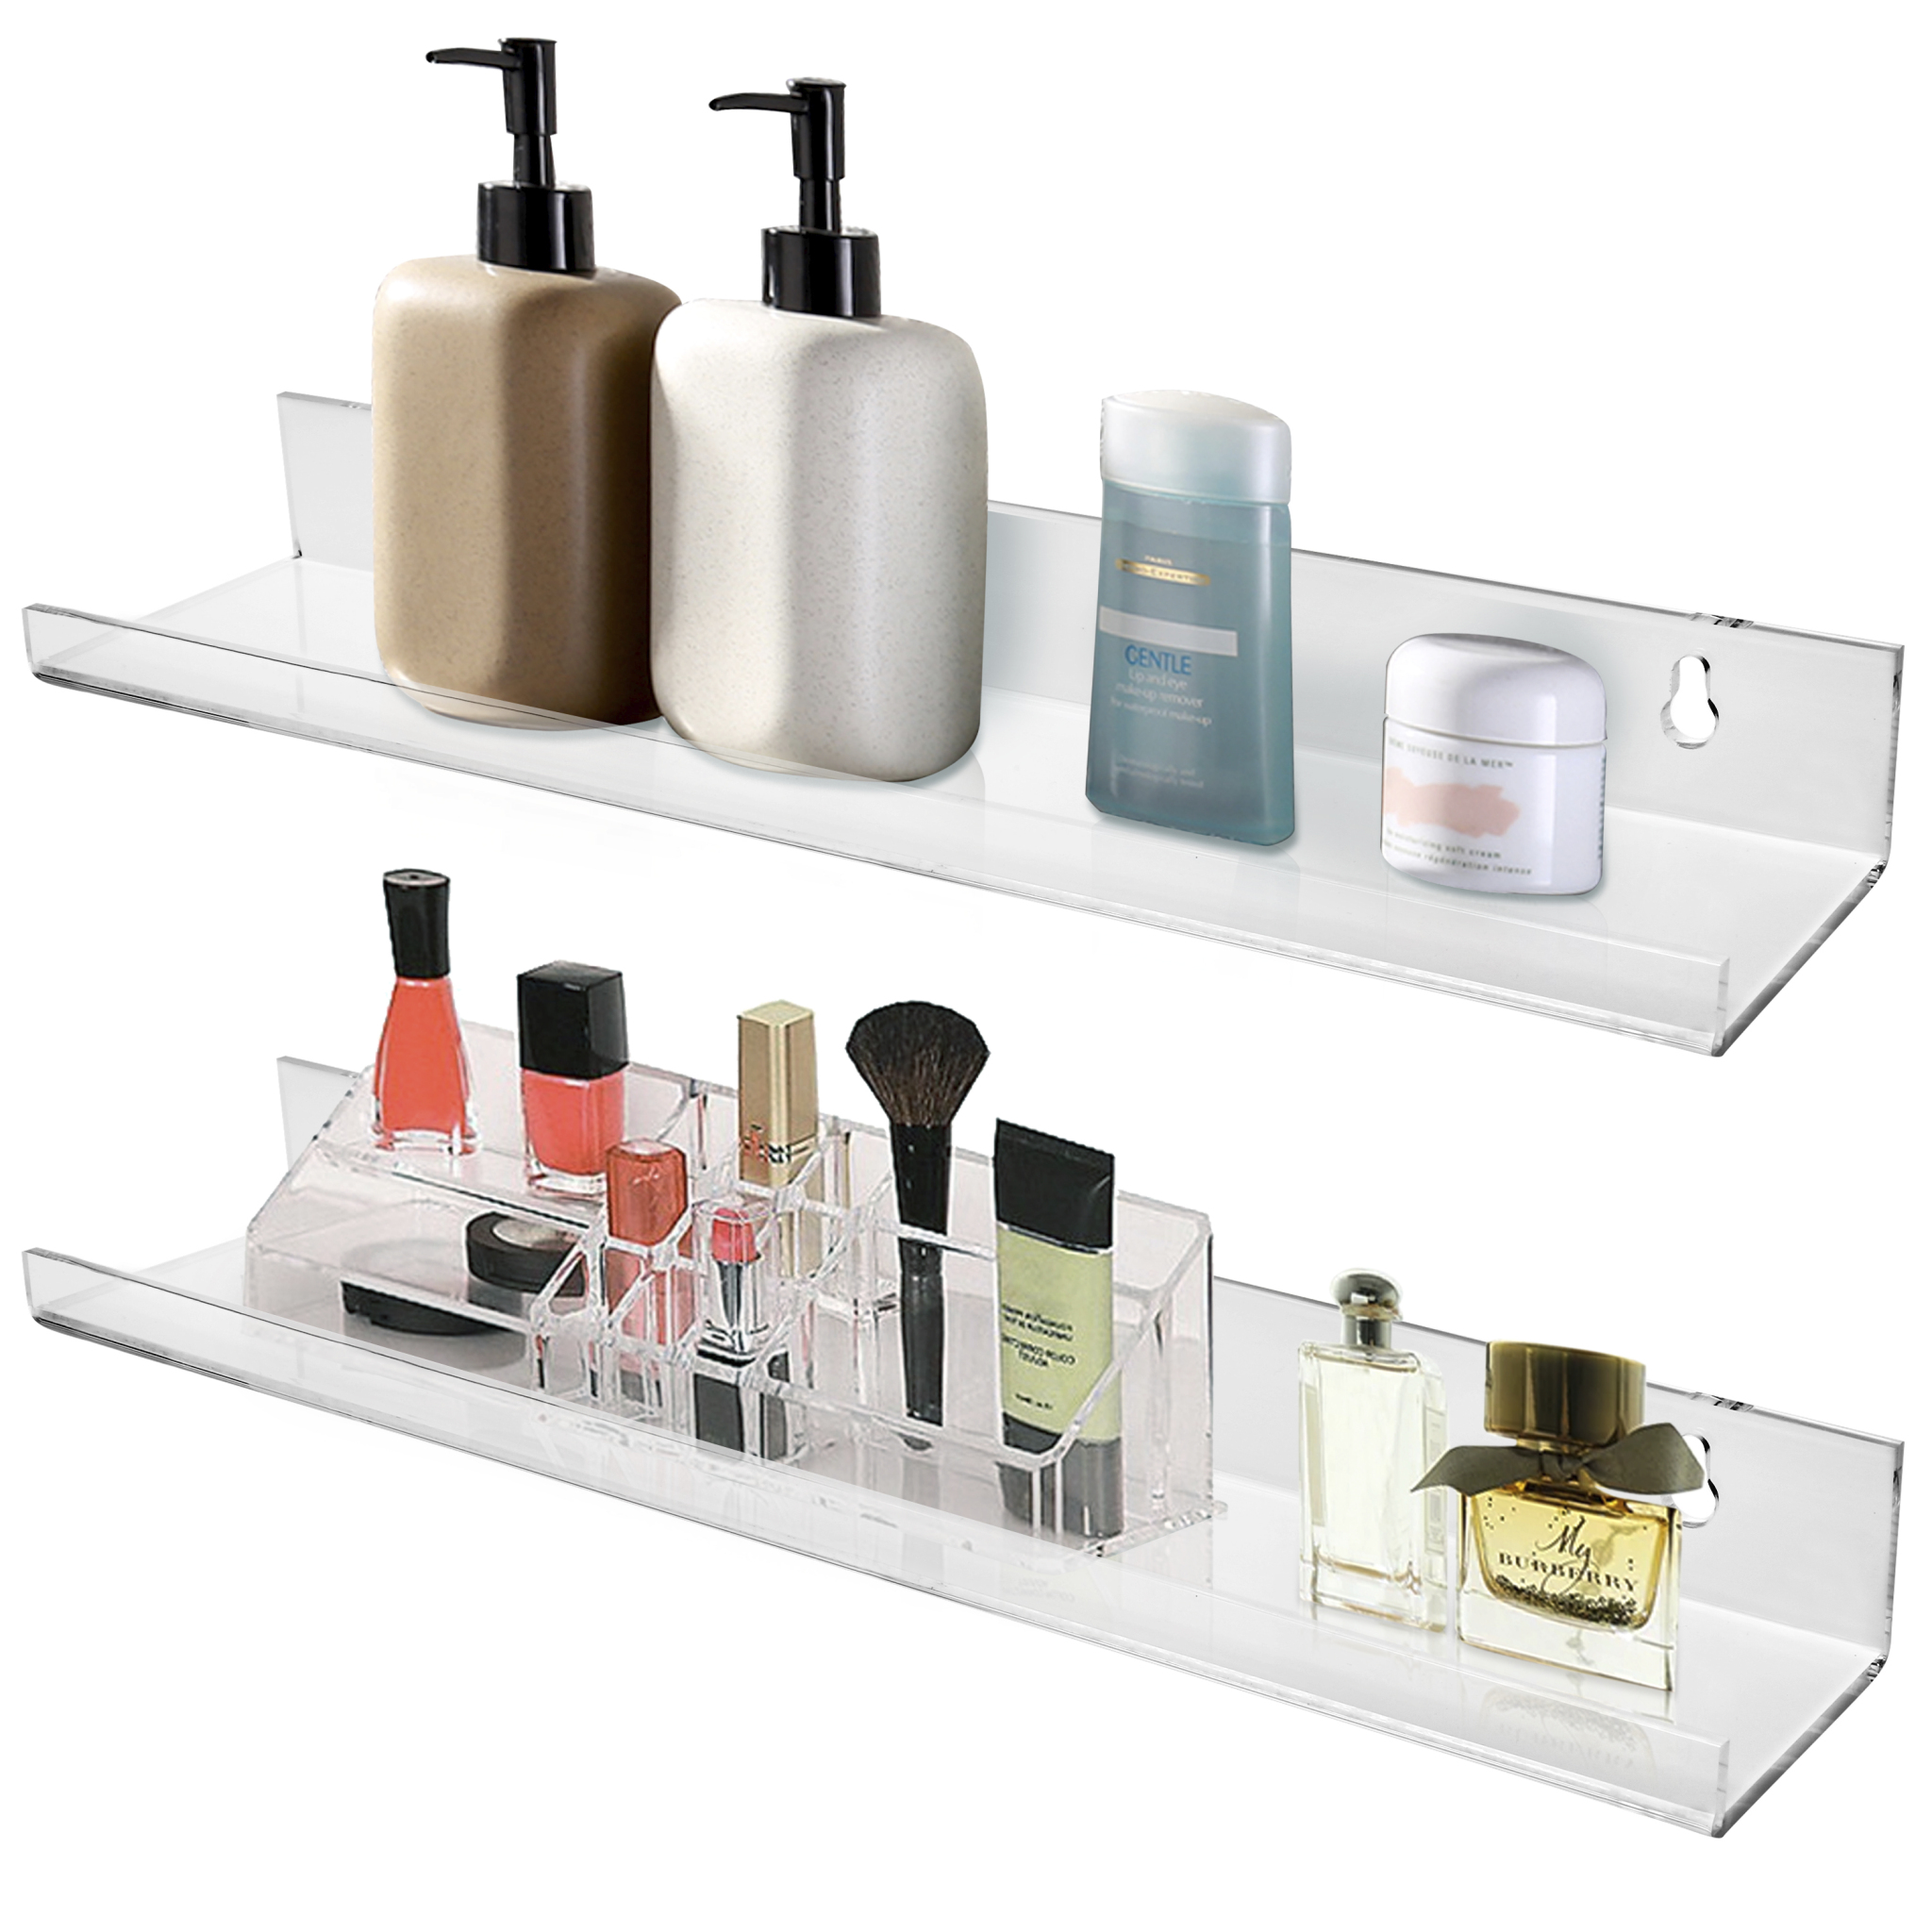 KLYWUN 2-Pack Acrylic Clear Shower Shelves,Adhesive Bathroom